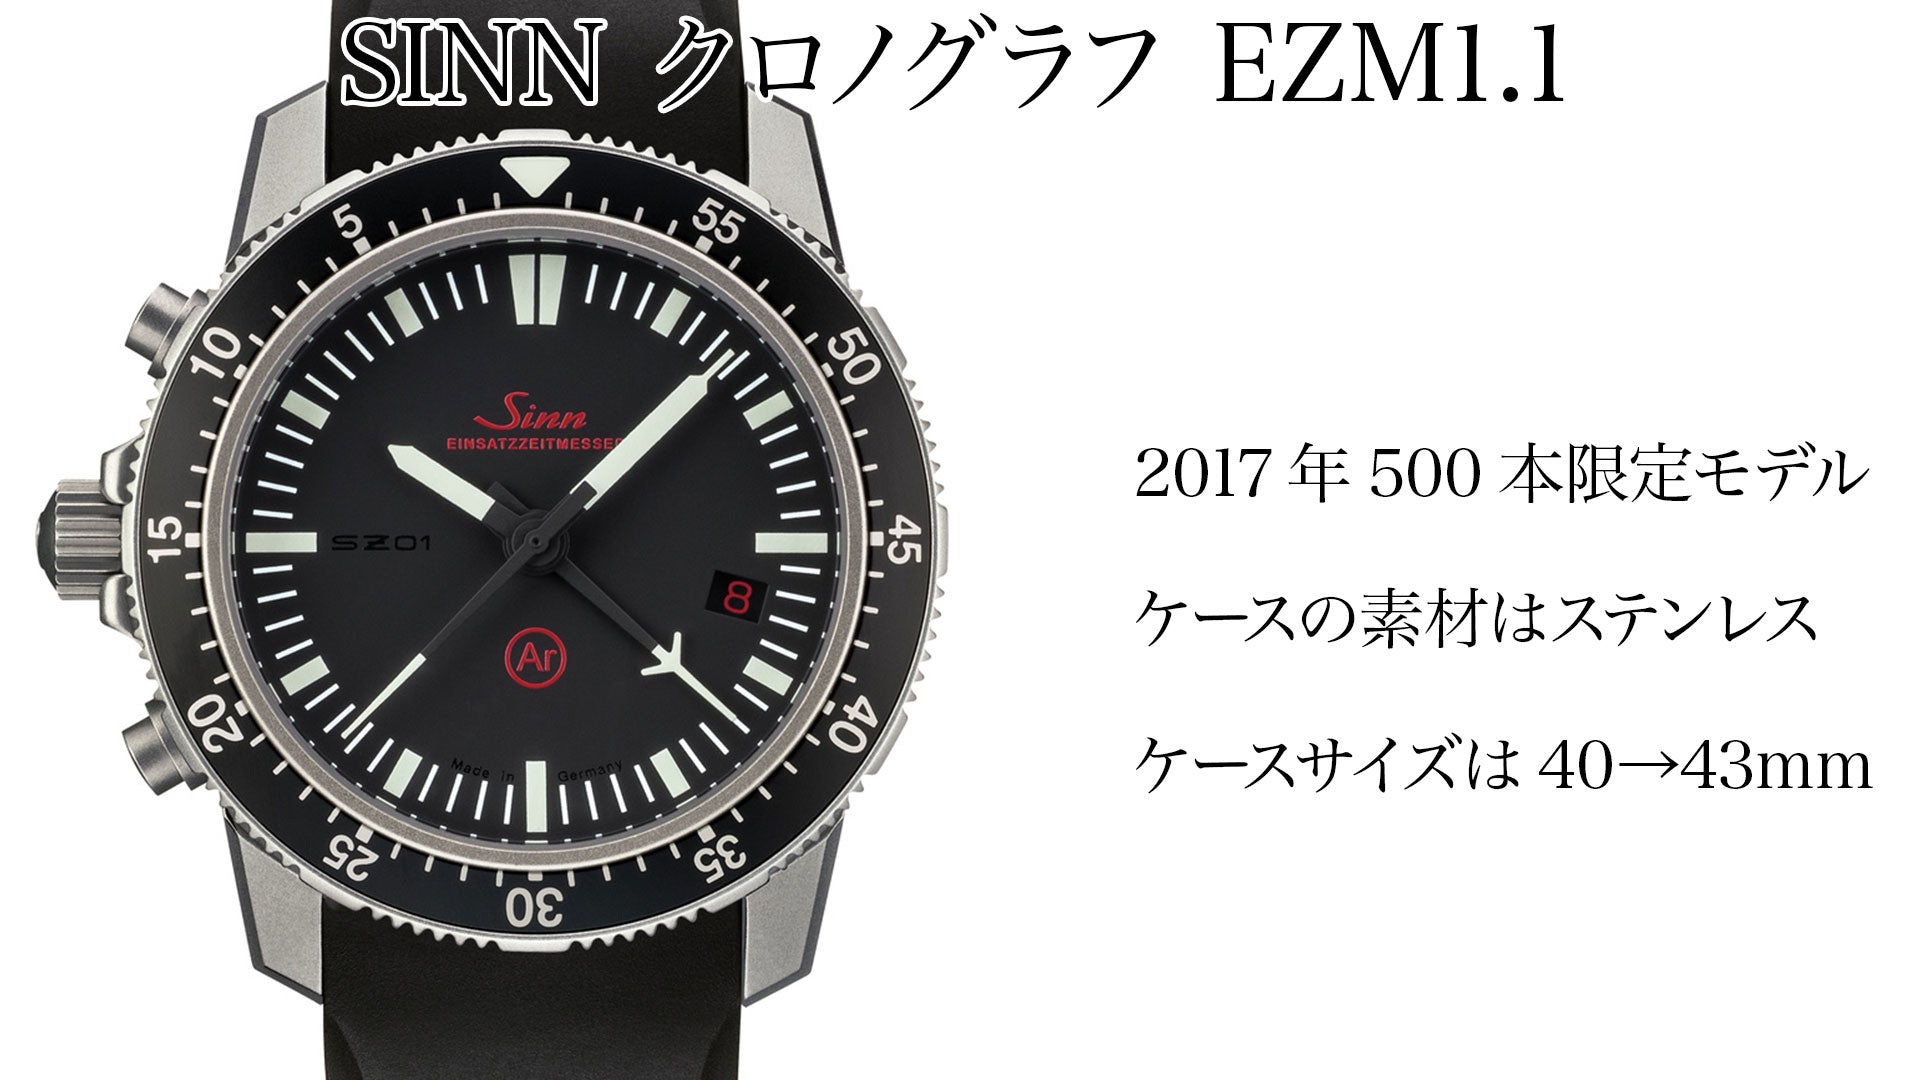 SINN Chronograph EZM1.1 2017 Limited Edition of 500